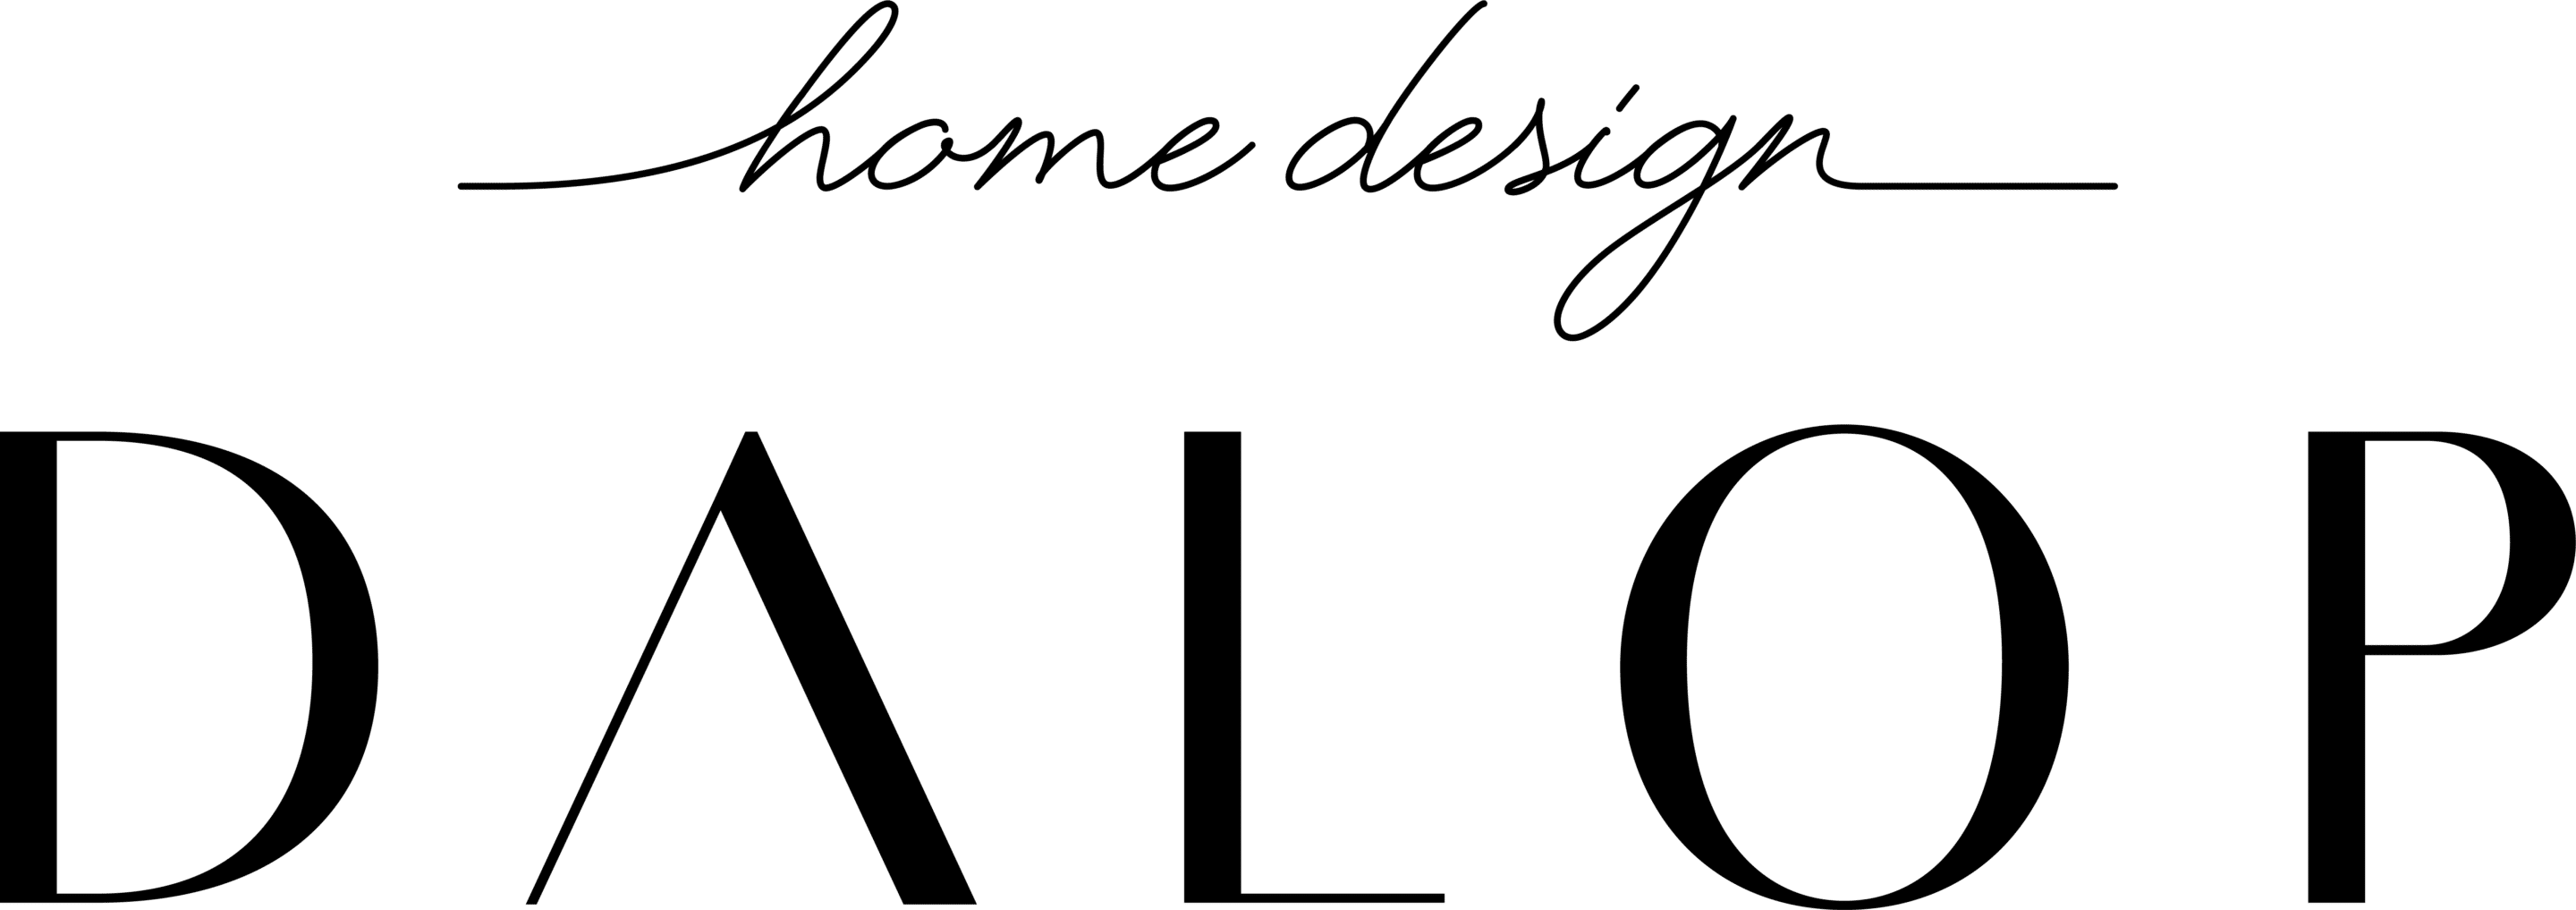 DaLop Design